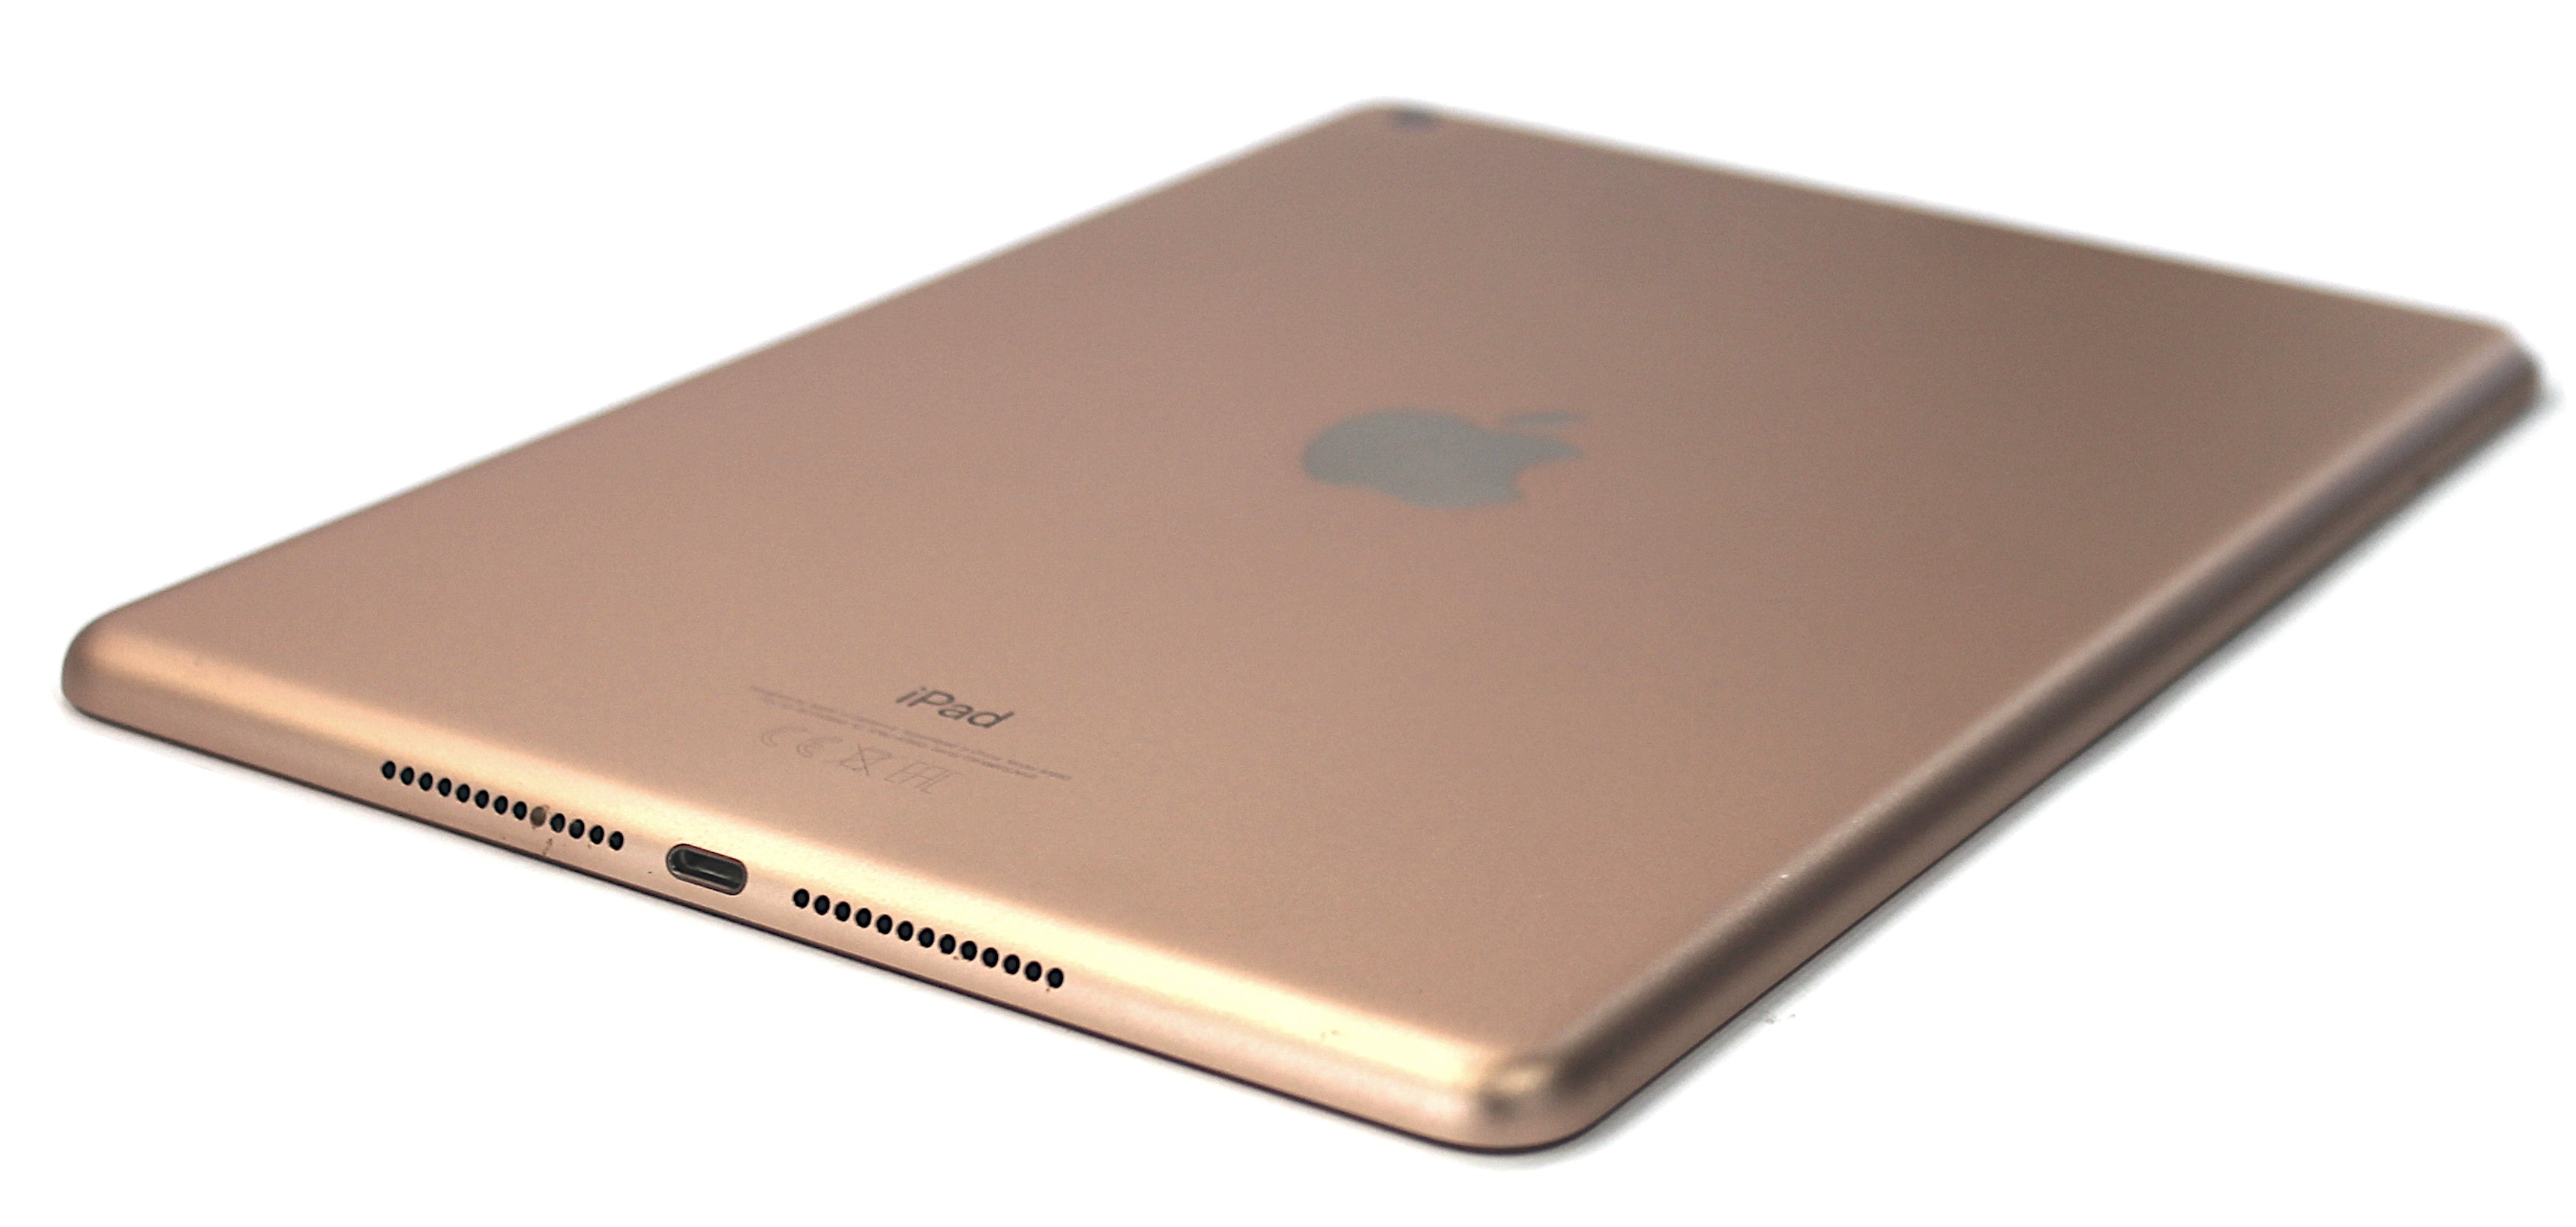 Apple iPad 6th Generation Tablet, 32GB, Wi-Fi, Rose Gold, A1893